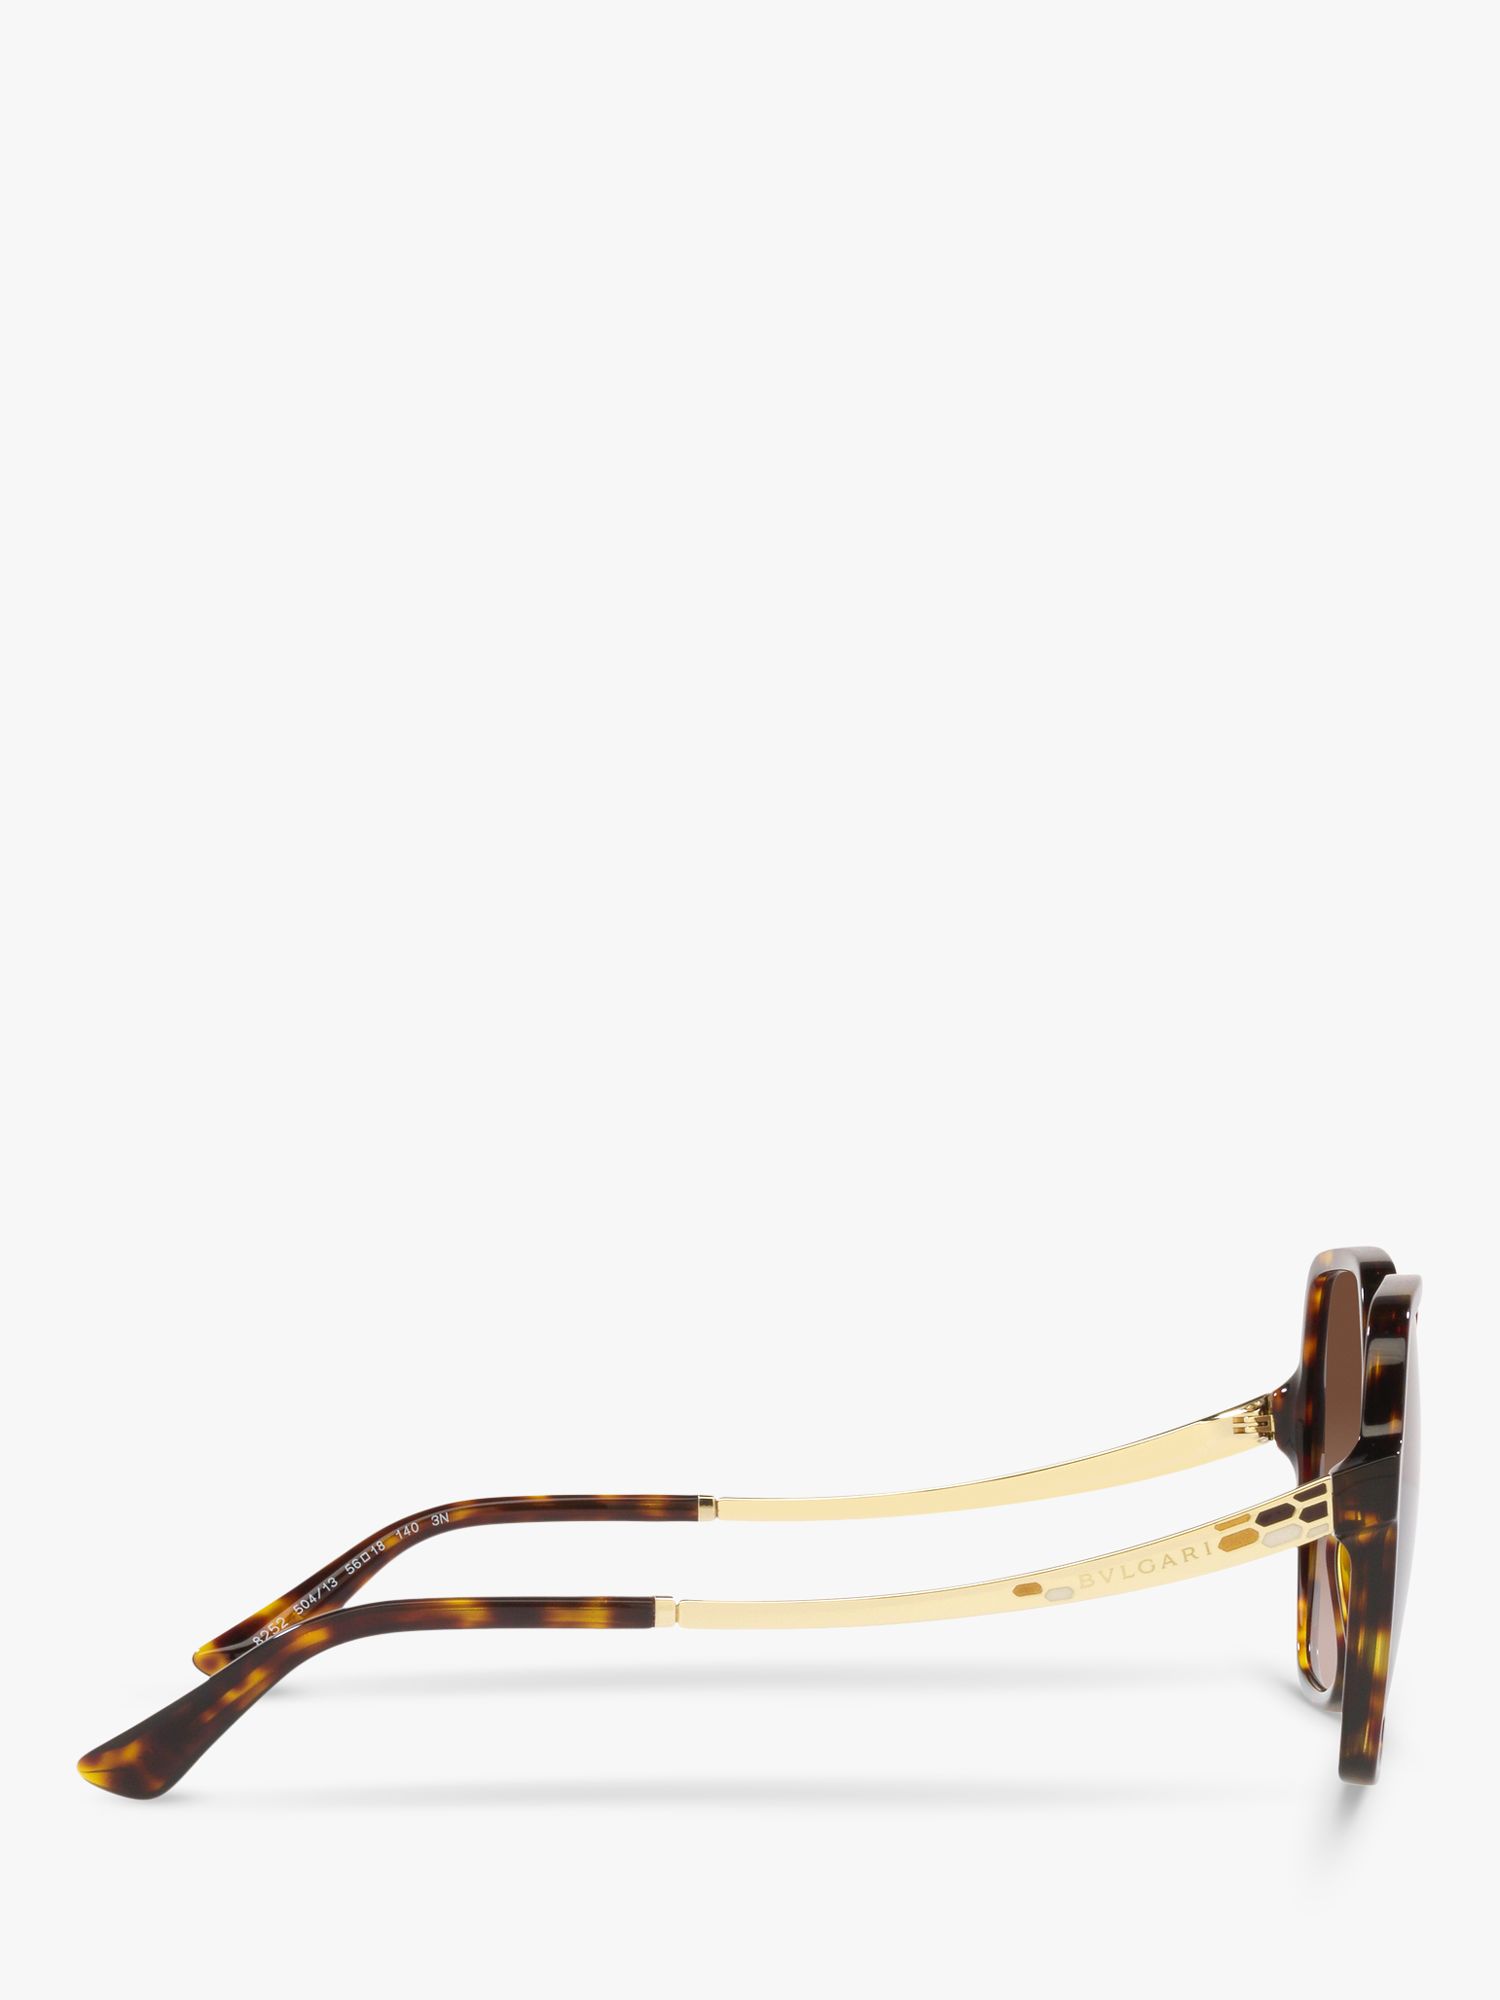 Buy BVLGARI BV8252 Women's Irregular Sunglasses Online at johnlewis.com